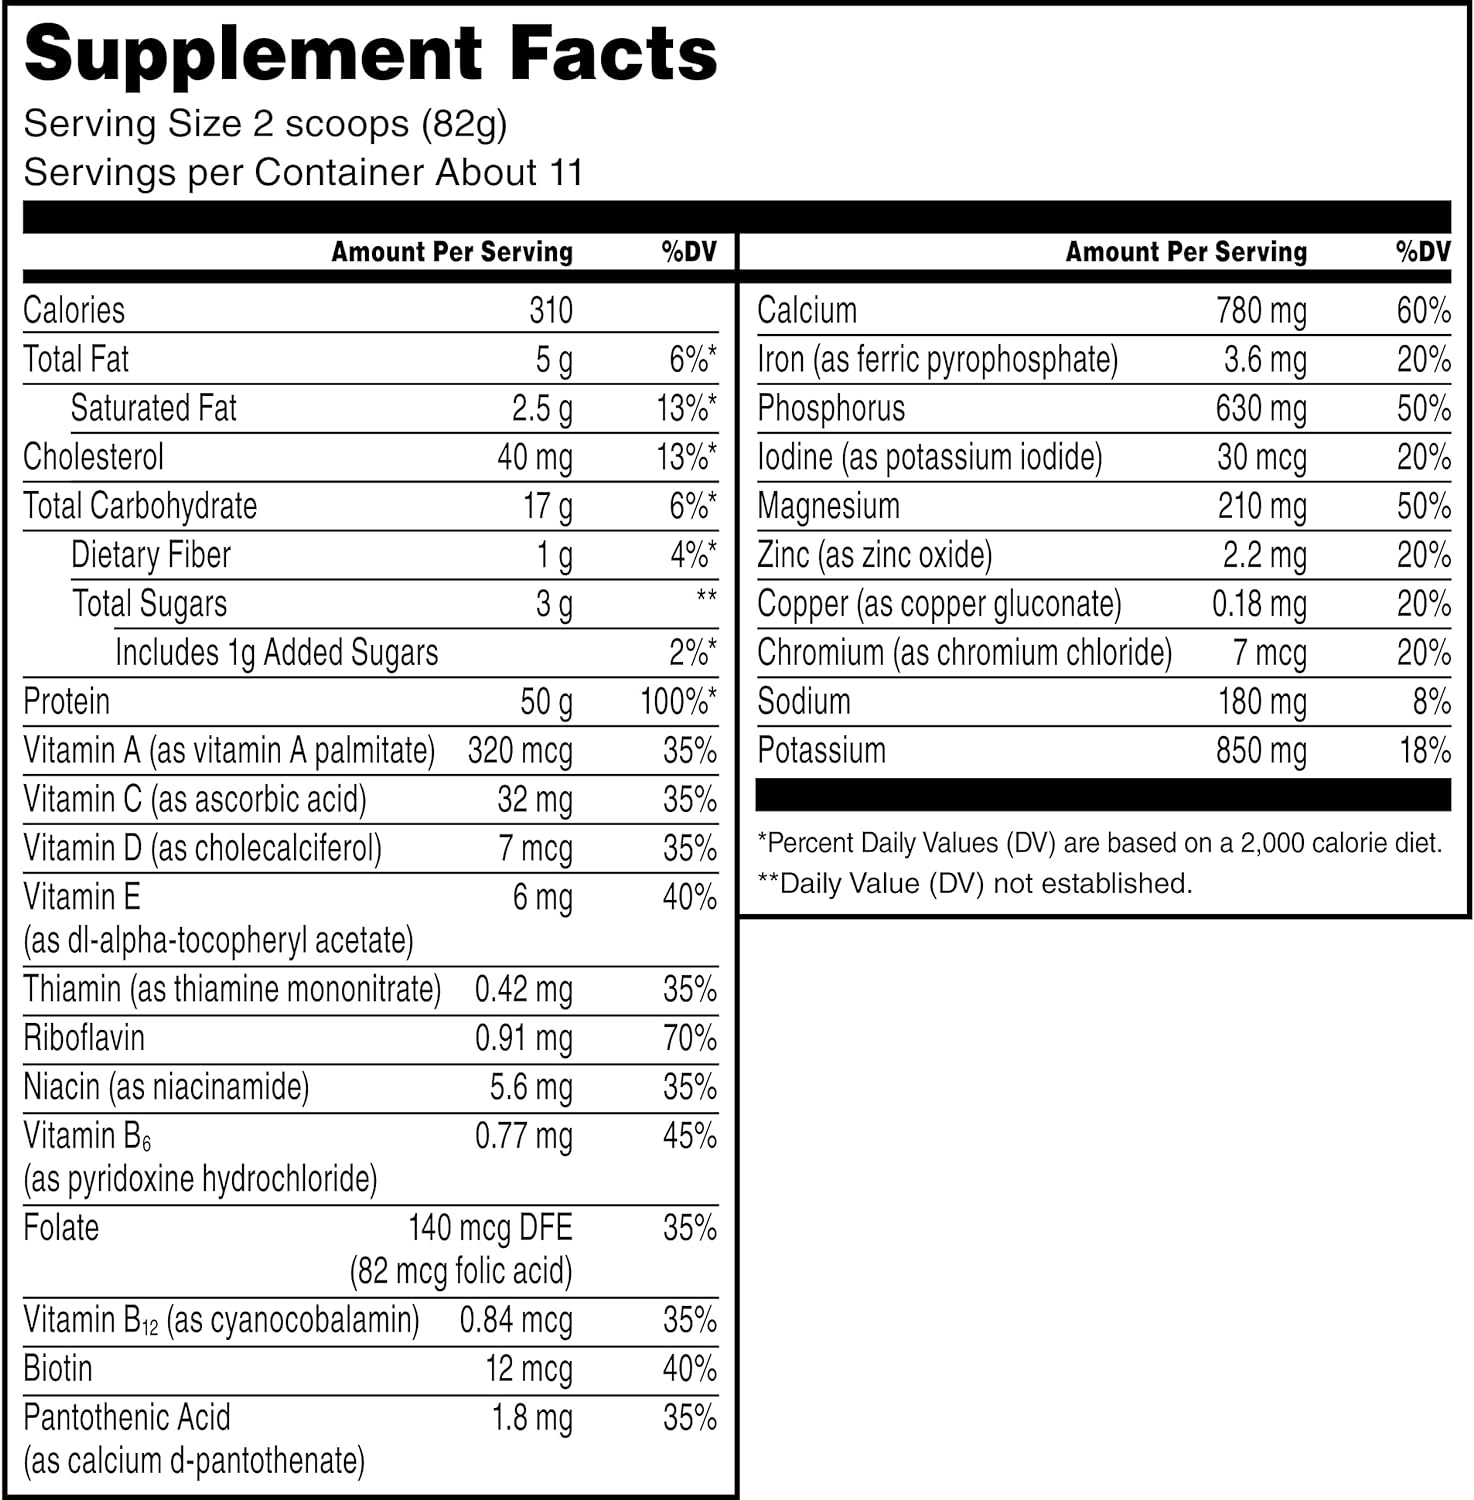 Muscle Milk Protein Powder | Chocolate | 2lbs, 11 Servings, 32g Protein, 2g Sugar